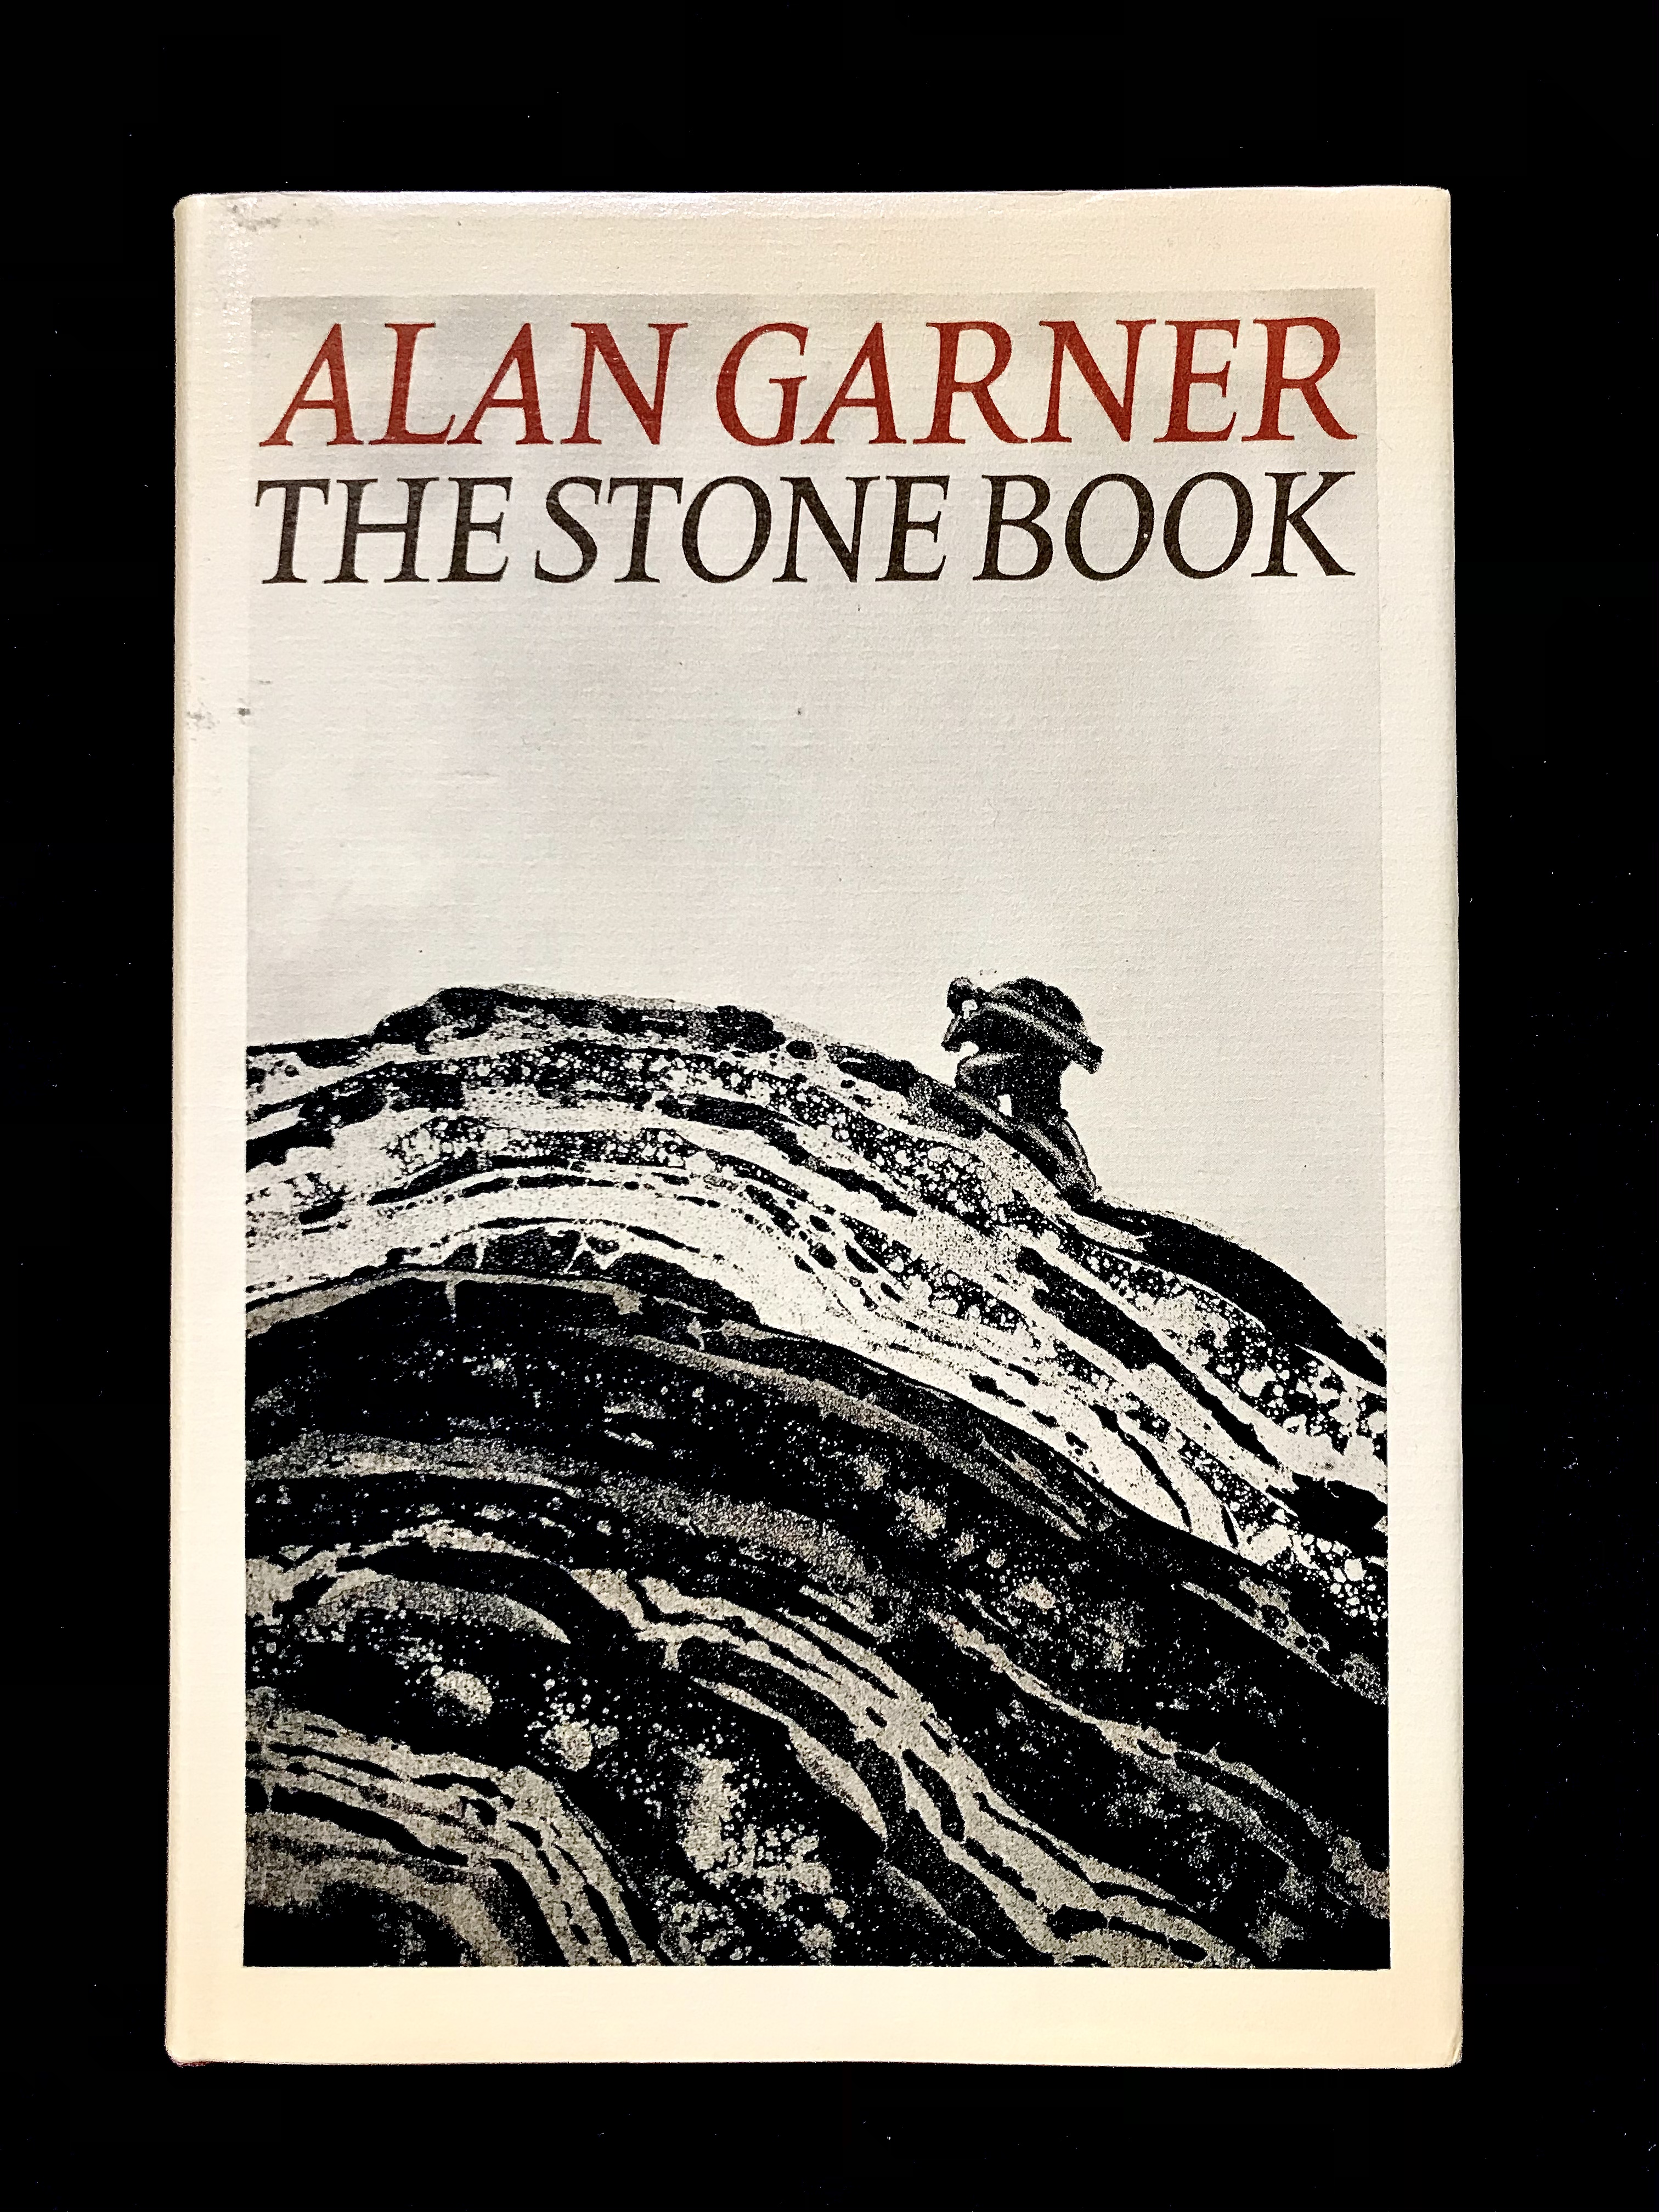 The Stone Book by Alan Garner